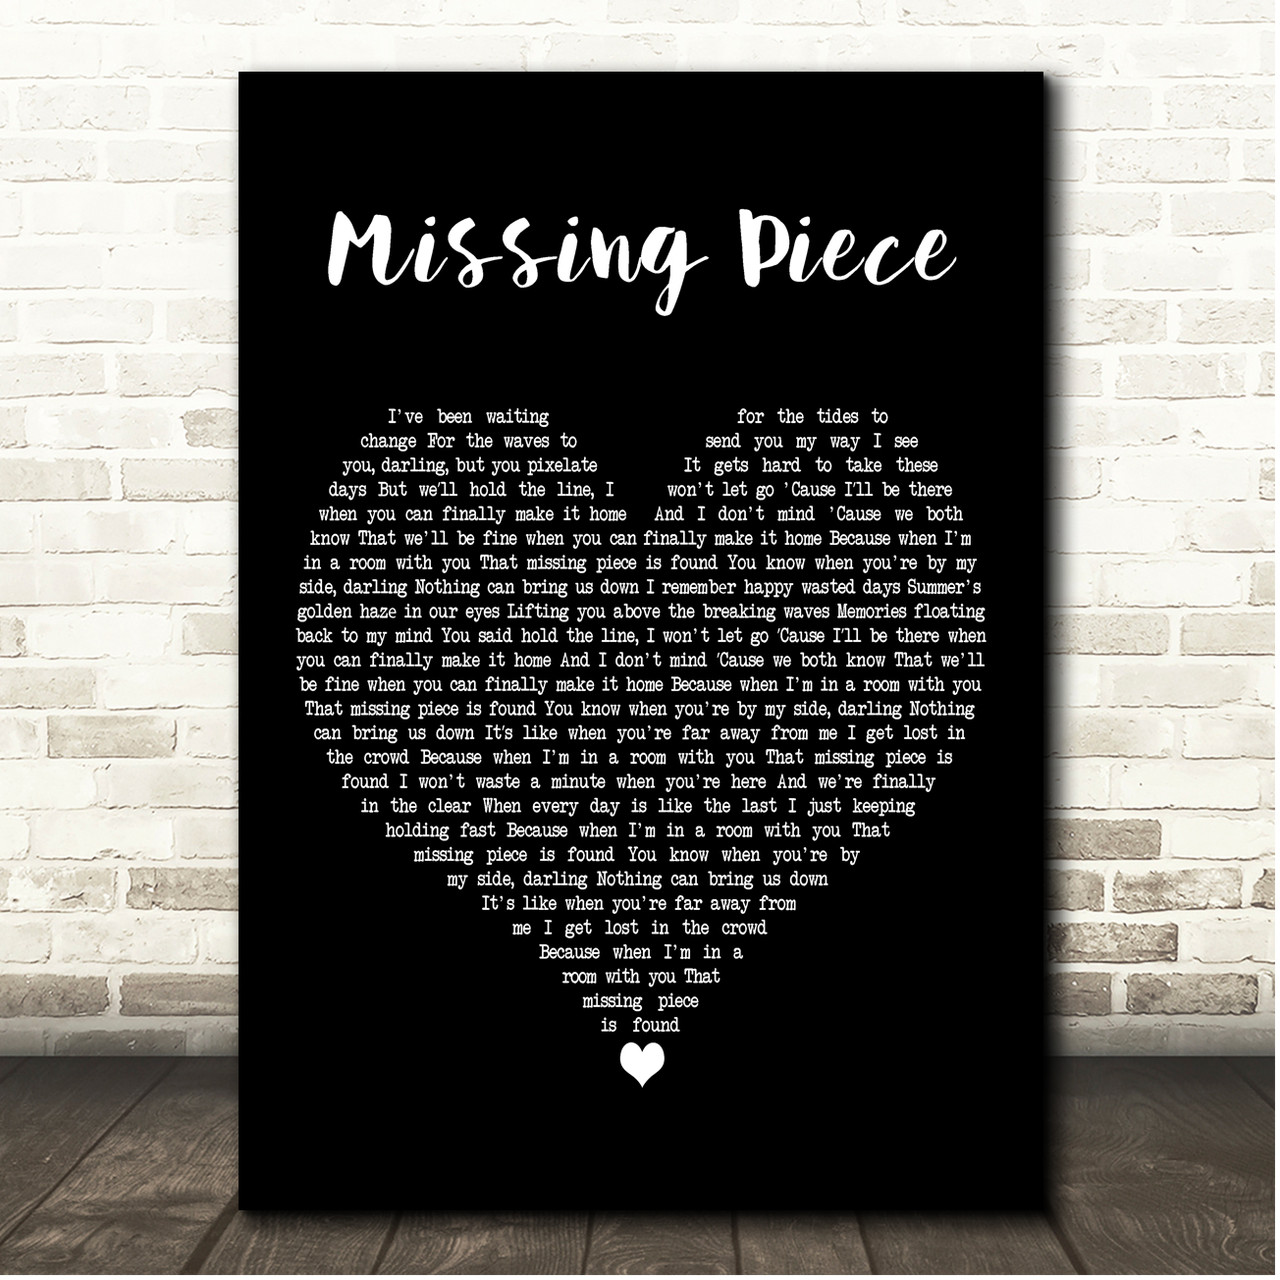 Vance Joy - Missing Piece (Lyrics) 